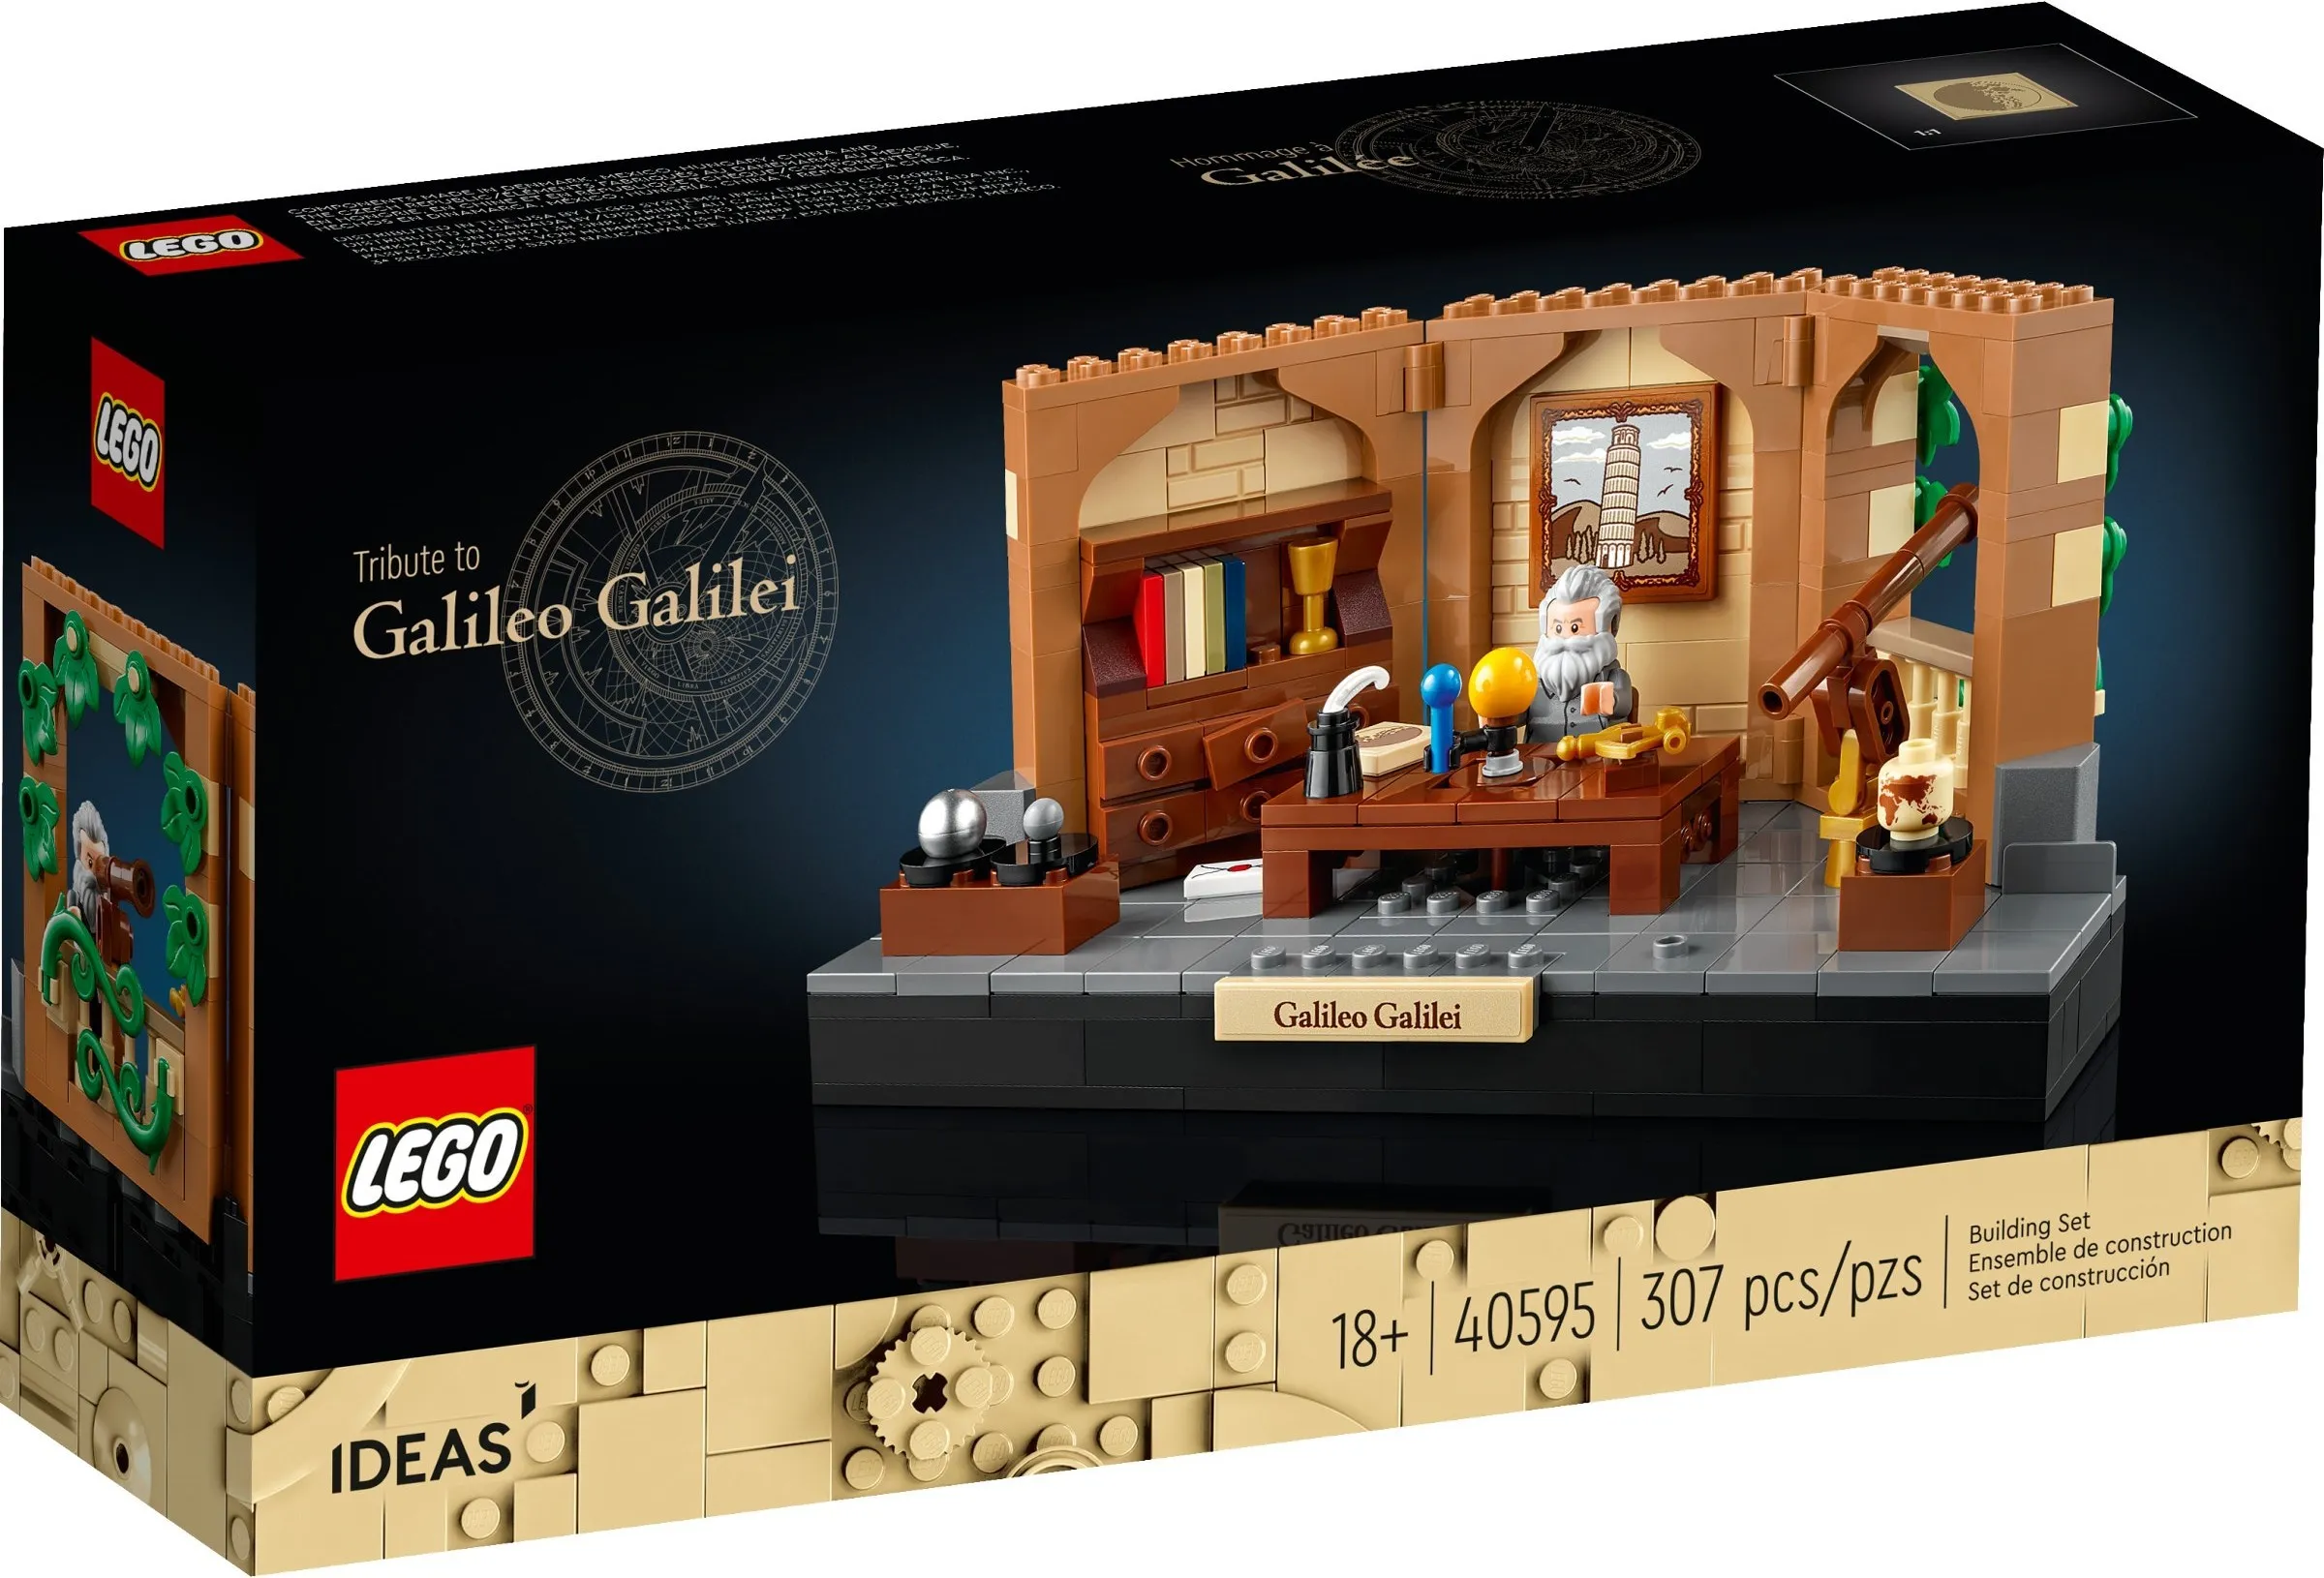 The Galileo Galilei LEGO Set